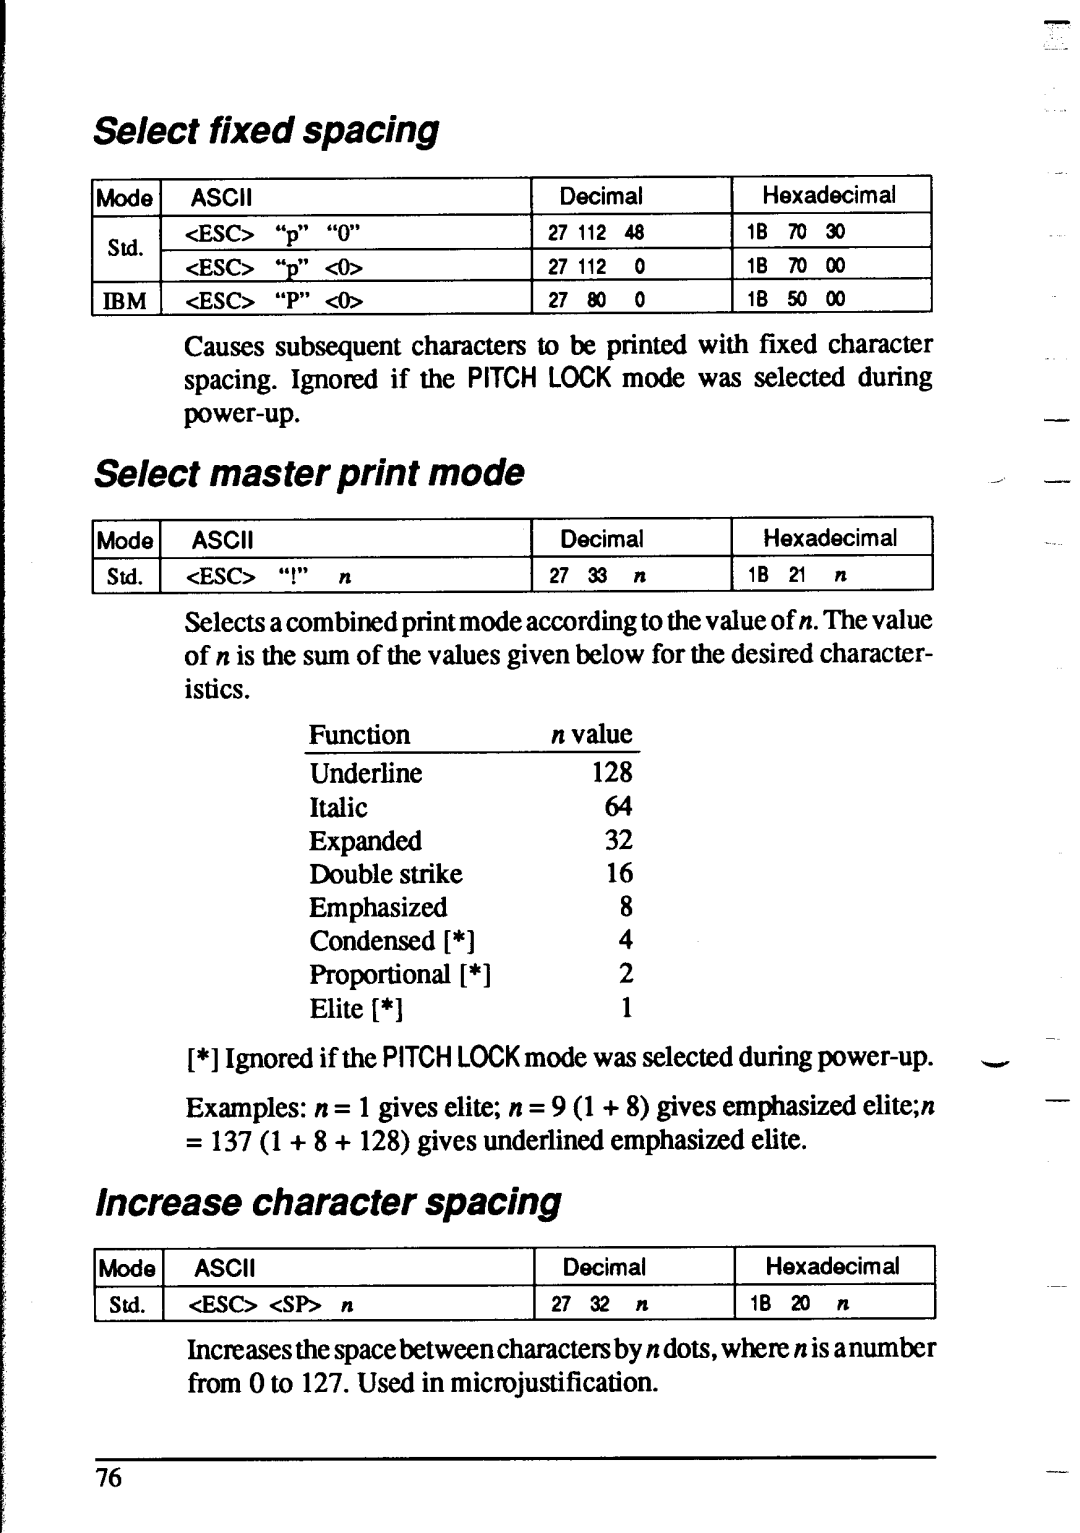 Star Micronics XR-1020, XR-1520 manual Select fixed spacing, Select master print mode, Increase character spacing 